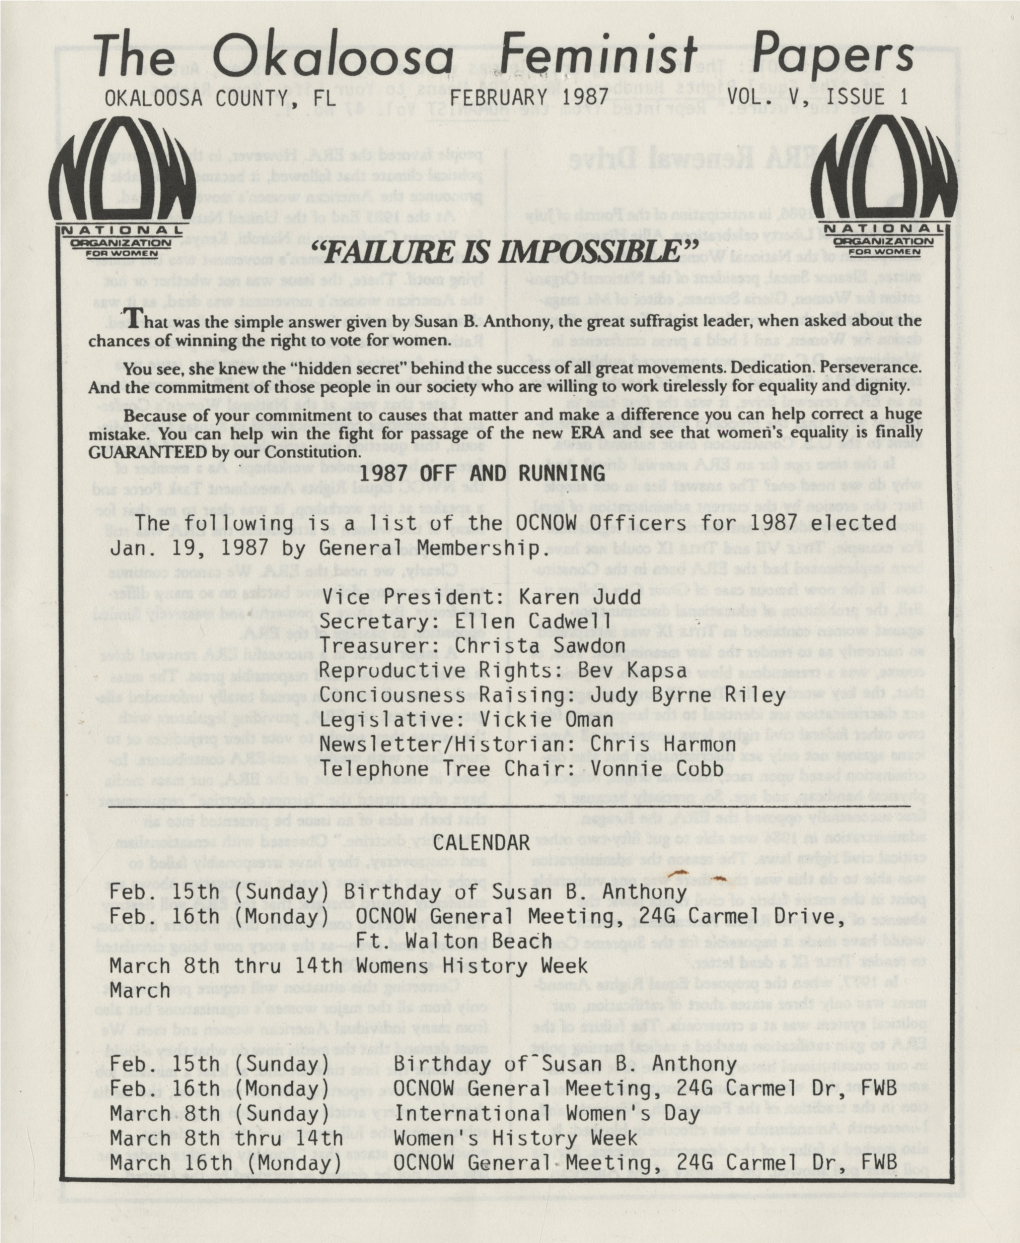 The Oka/Oosa ,Feminist Papers OKALOOSA COUNTY, FL FEBRUARY 1987 VOL